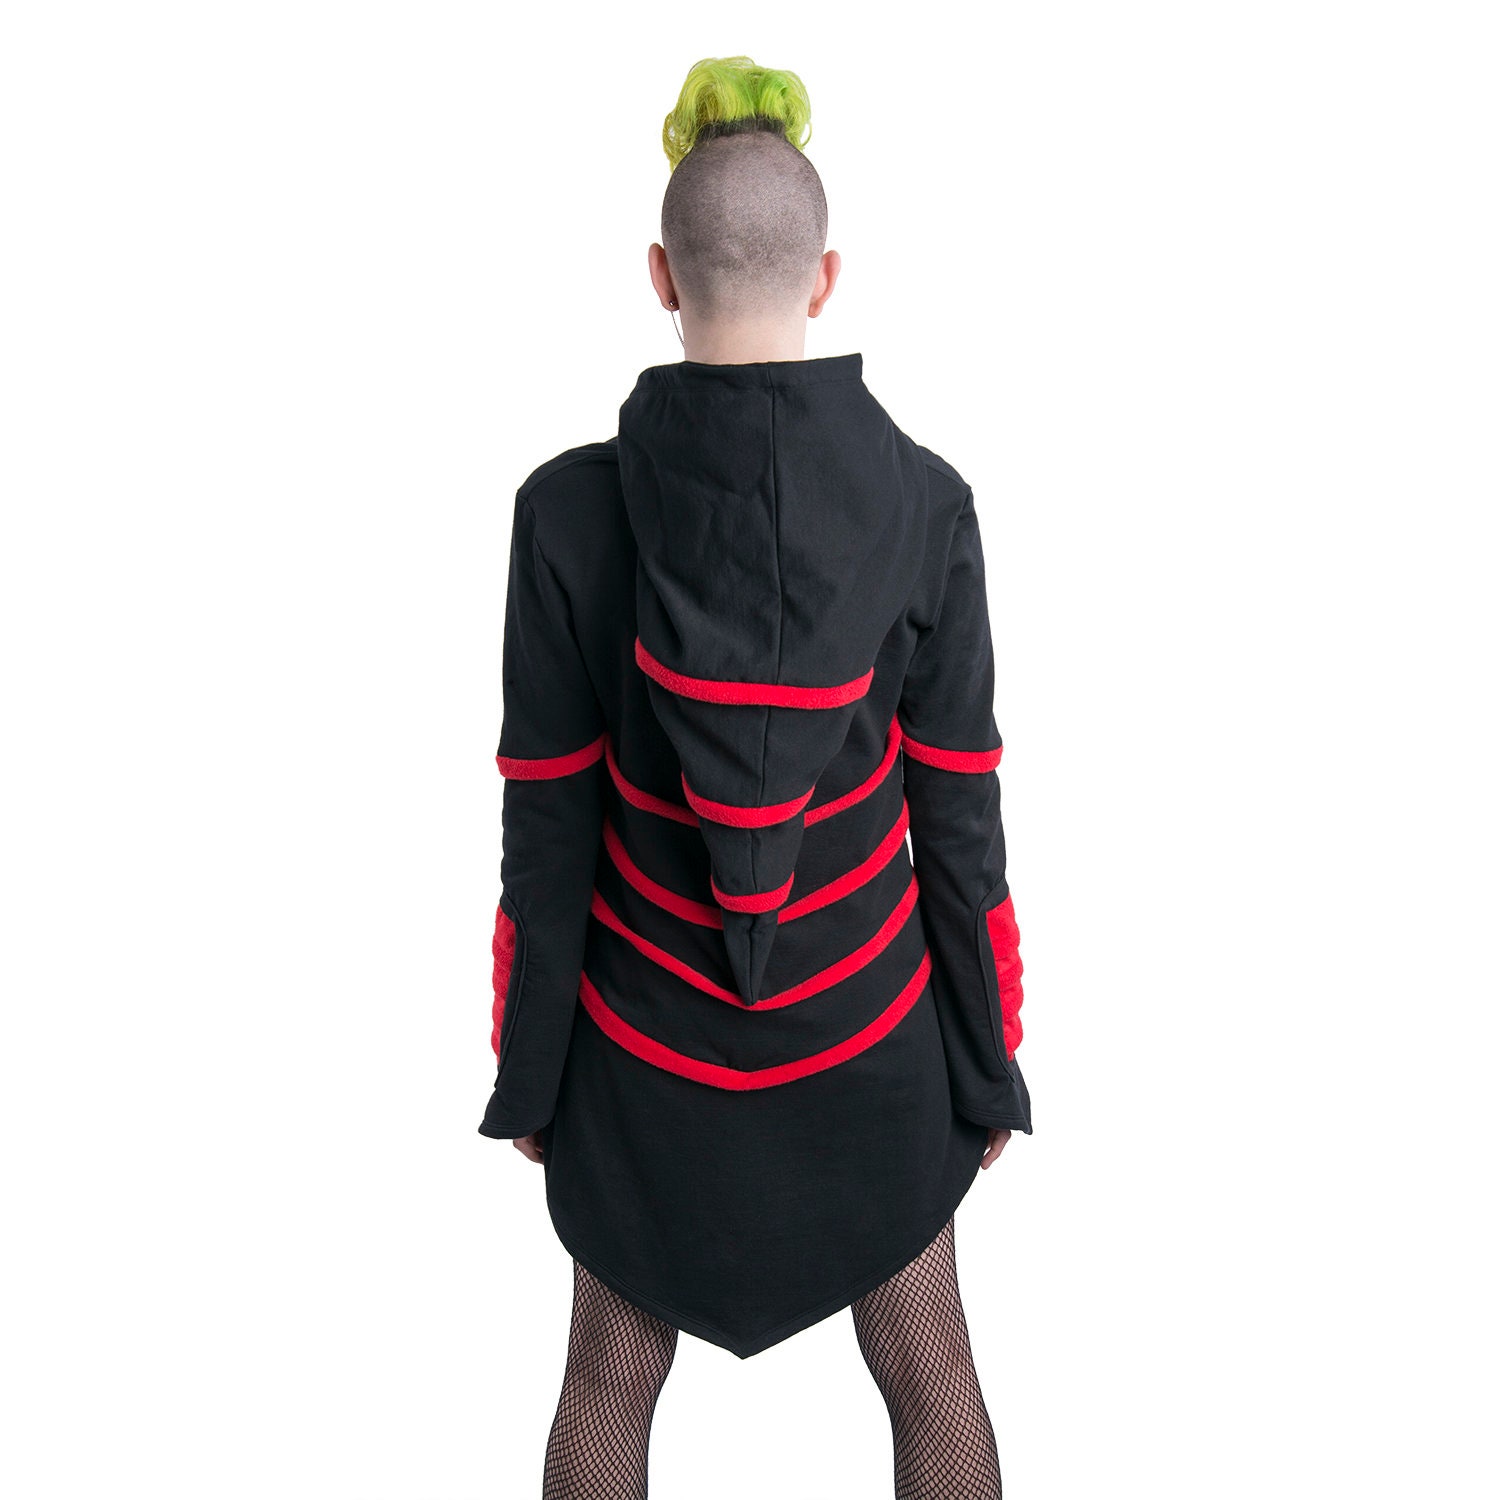 kleur- en maatopties beschikbaar - 16012 DSFusion Cyber Mage Crop Shrug Cyberpunk DSFusion Wizard Gothic Industrial Futurewear Kleding Dameskleding Hoodies & Sweatshirts Hoodies 